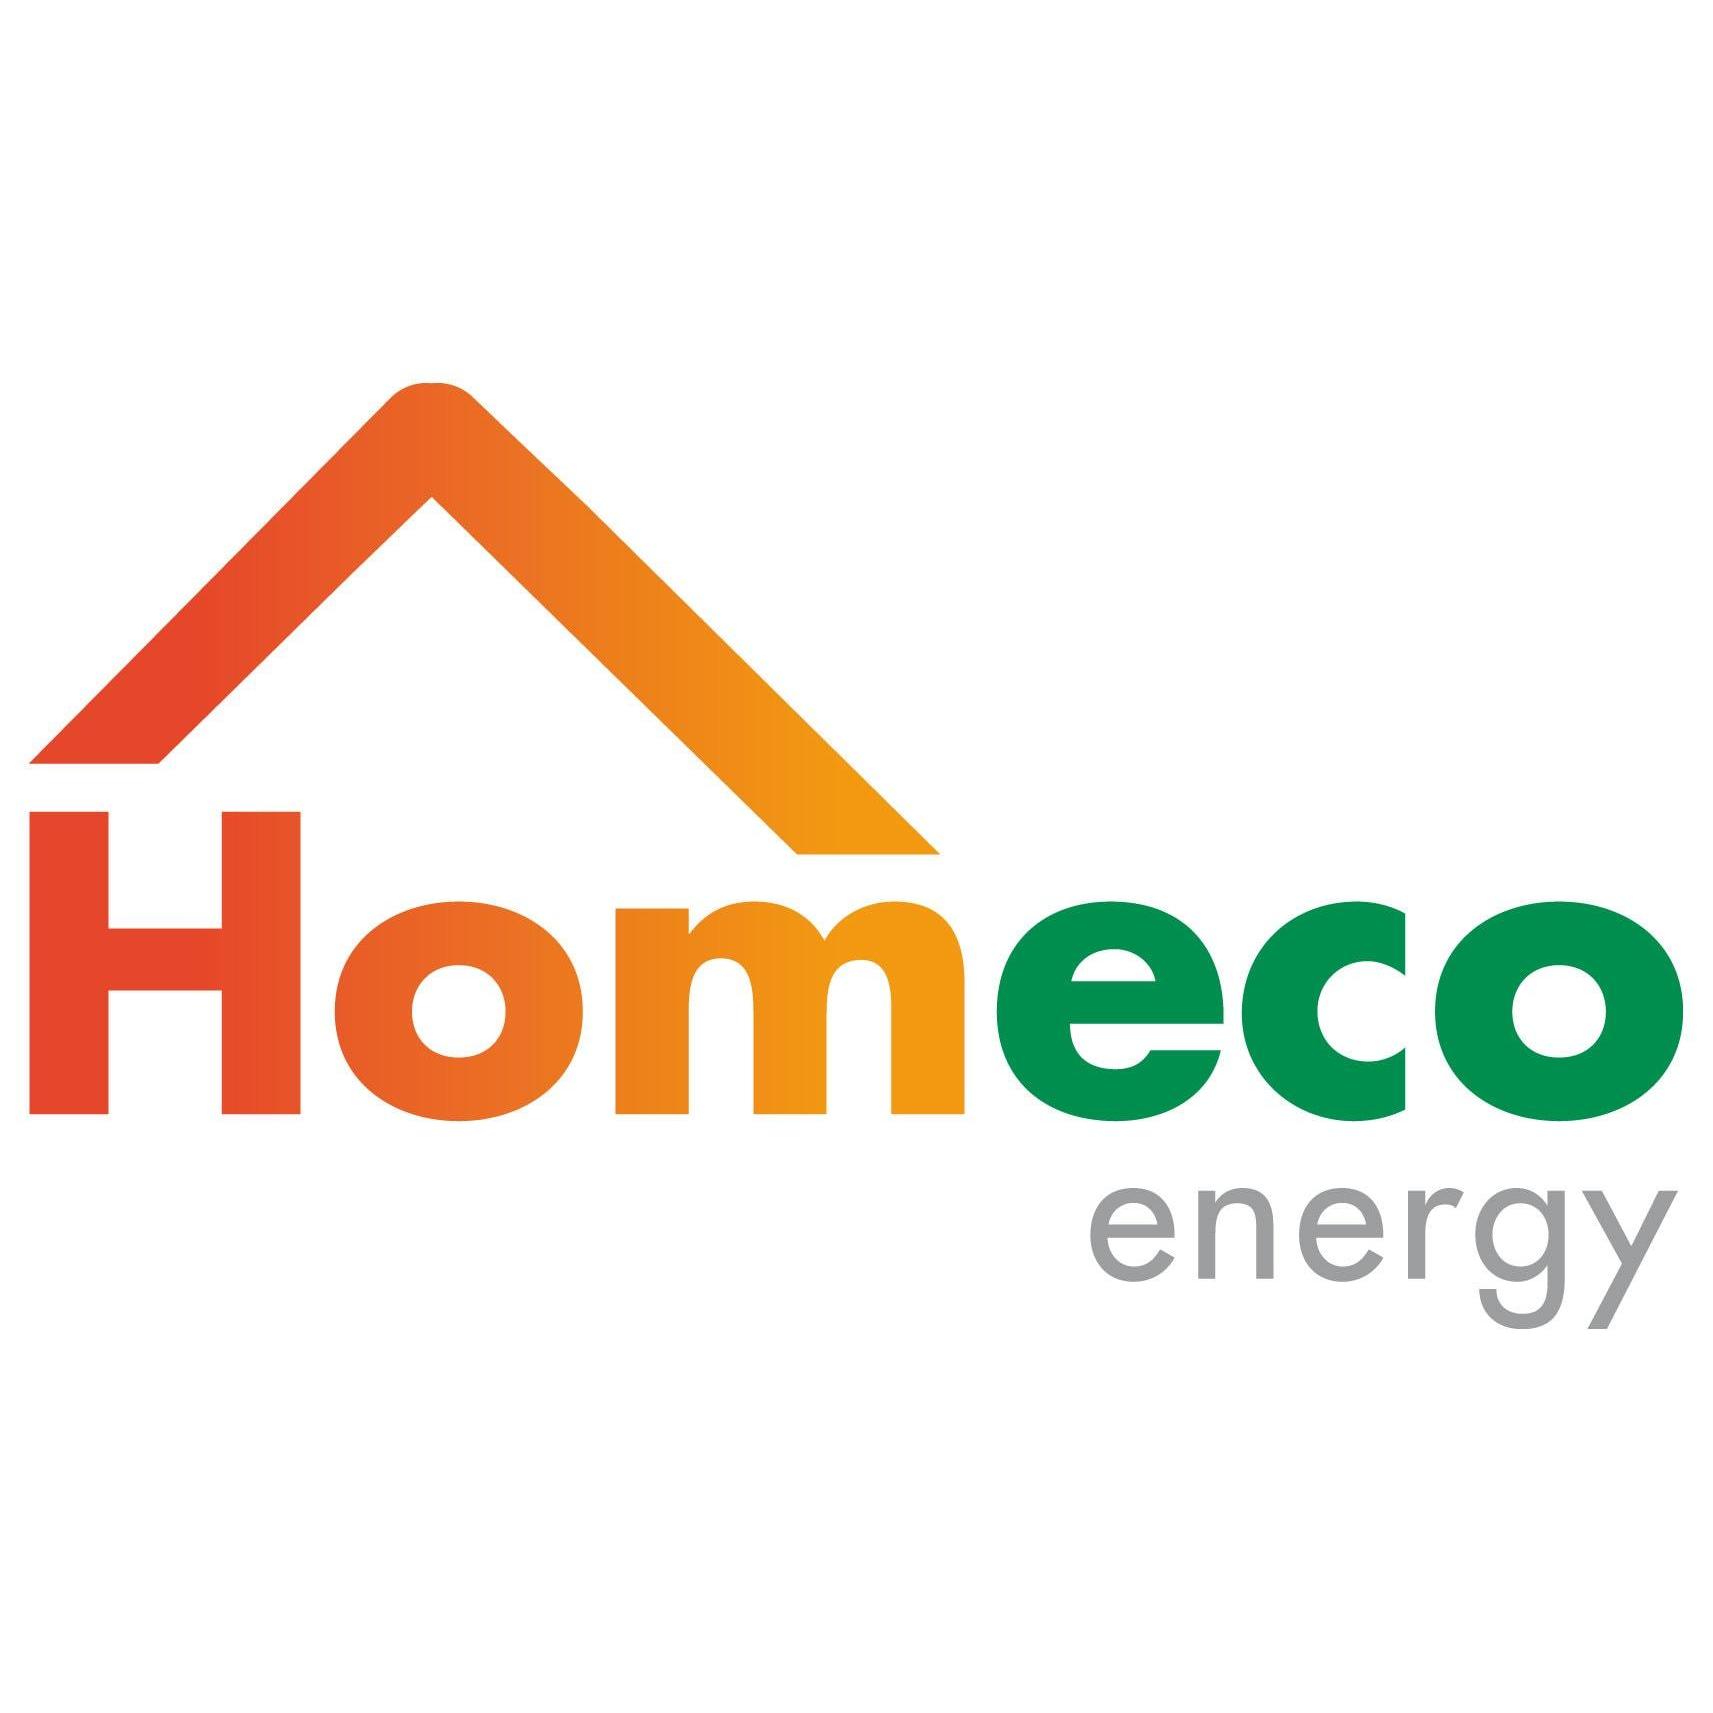 LOGO Homeco Energy Chesterfield 01142 935019